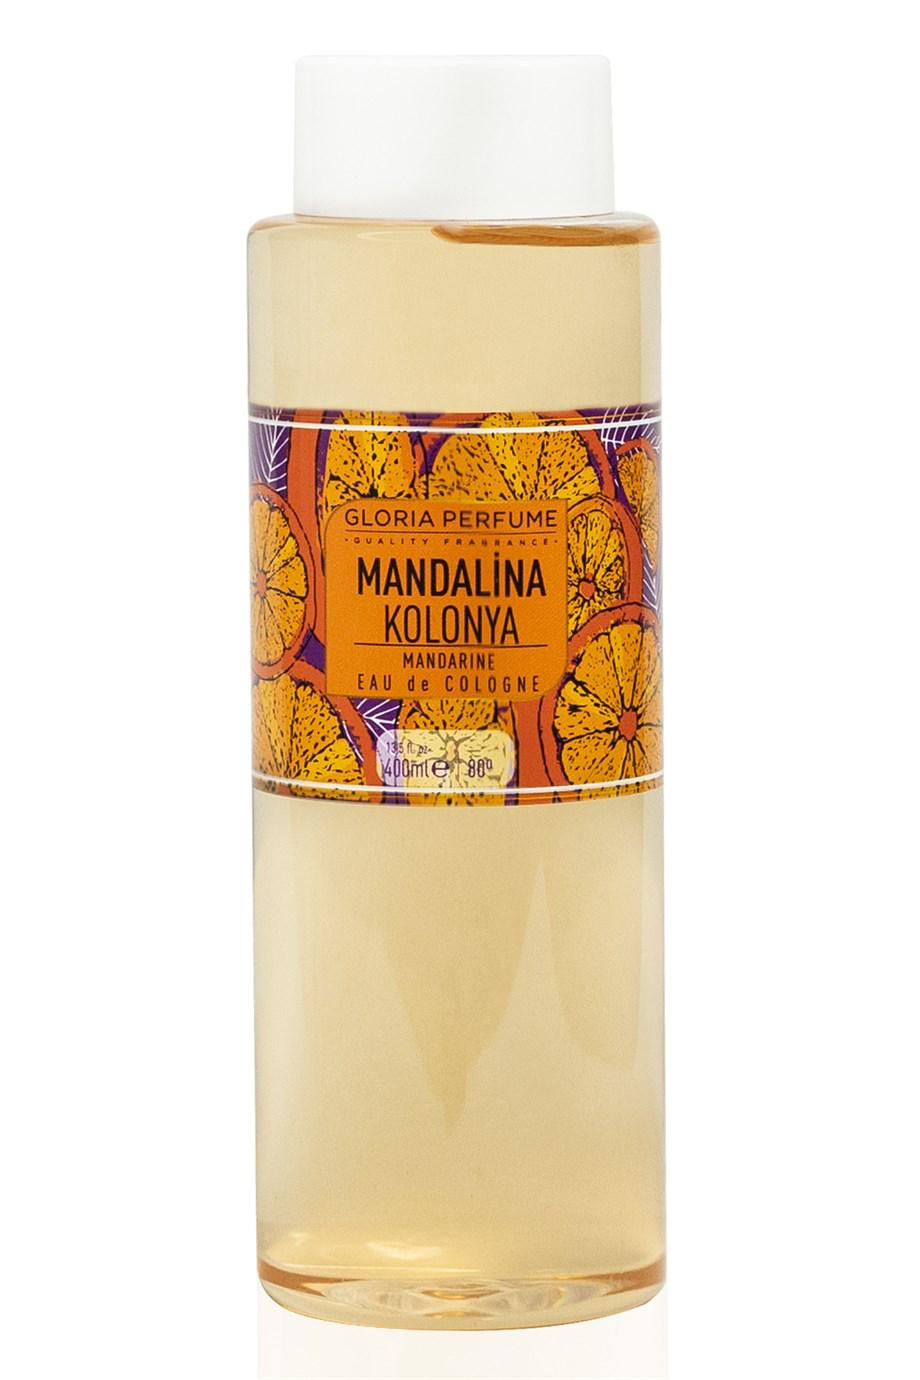 Gloria Perfume Mandalina Kolonya 400 ml